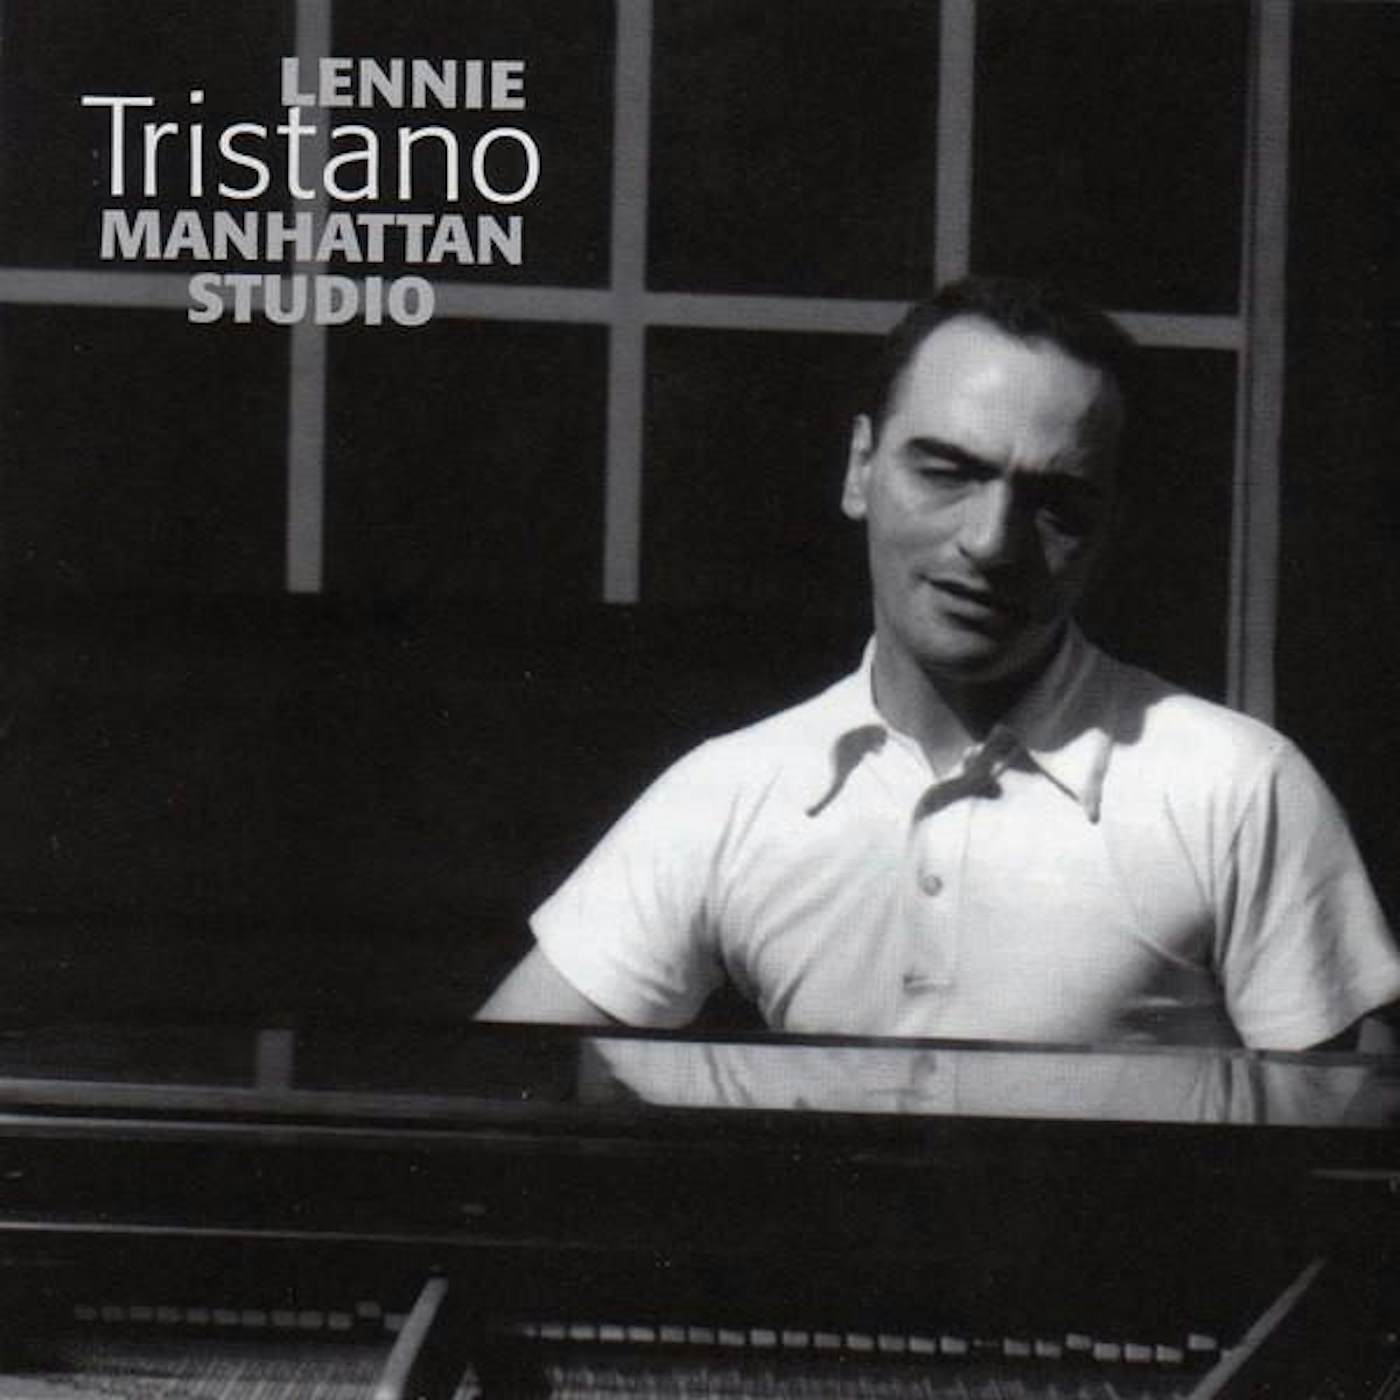 Lennie Tristano MANHATTAN STUDIO CD